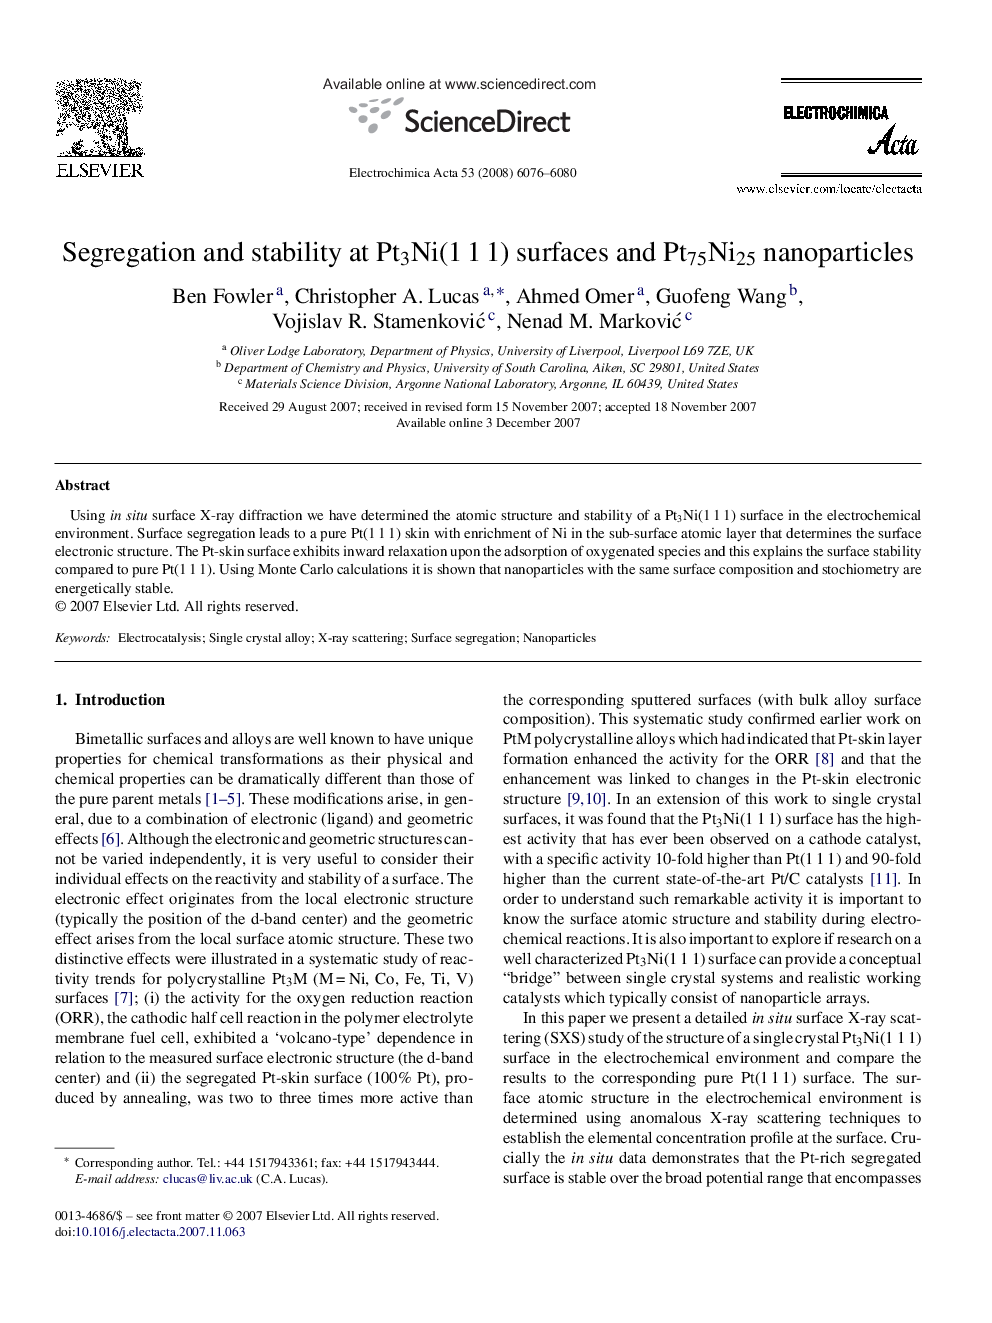 Segregation and stability at Pt3Ni(1 1 1) surfaces and Pt75Ni25 nanoparticles